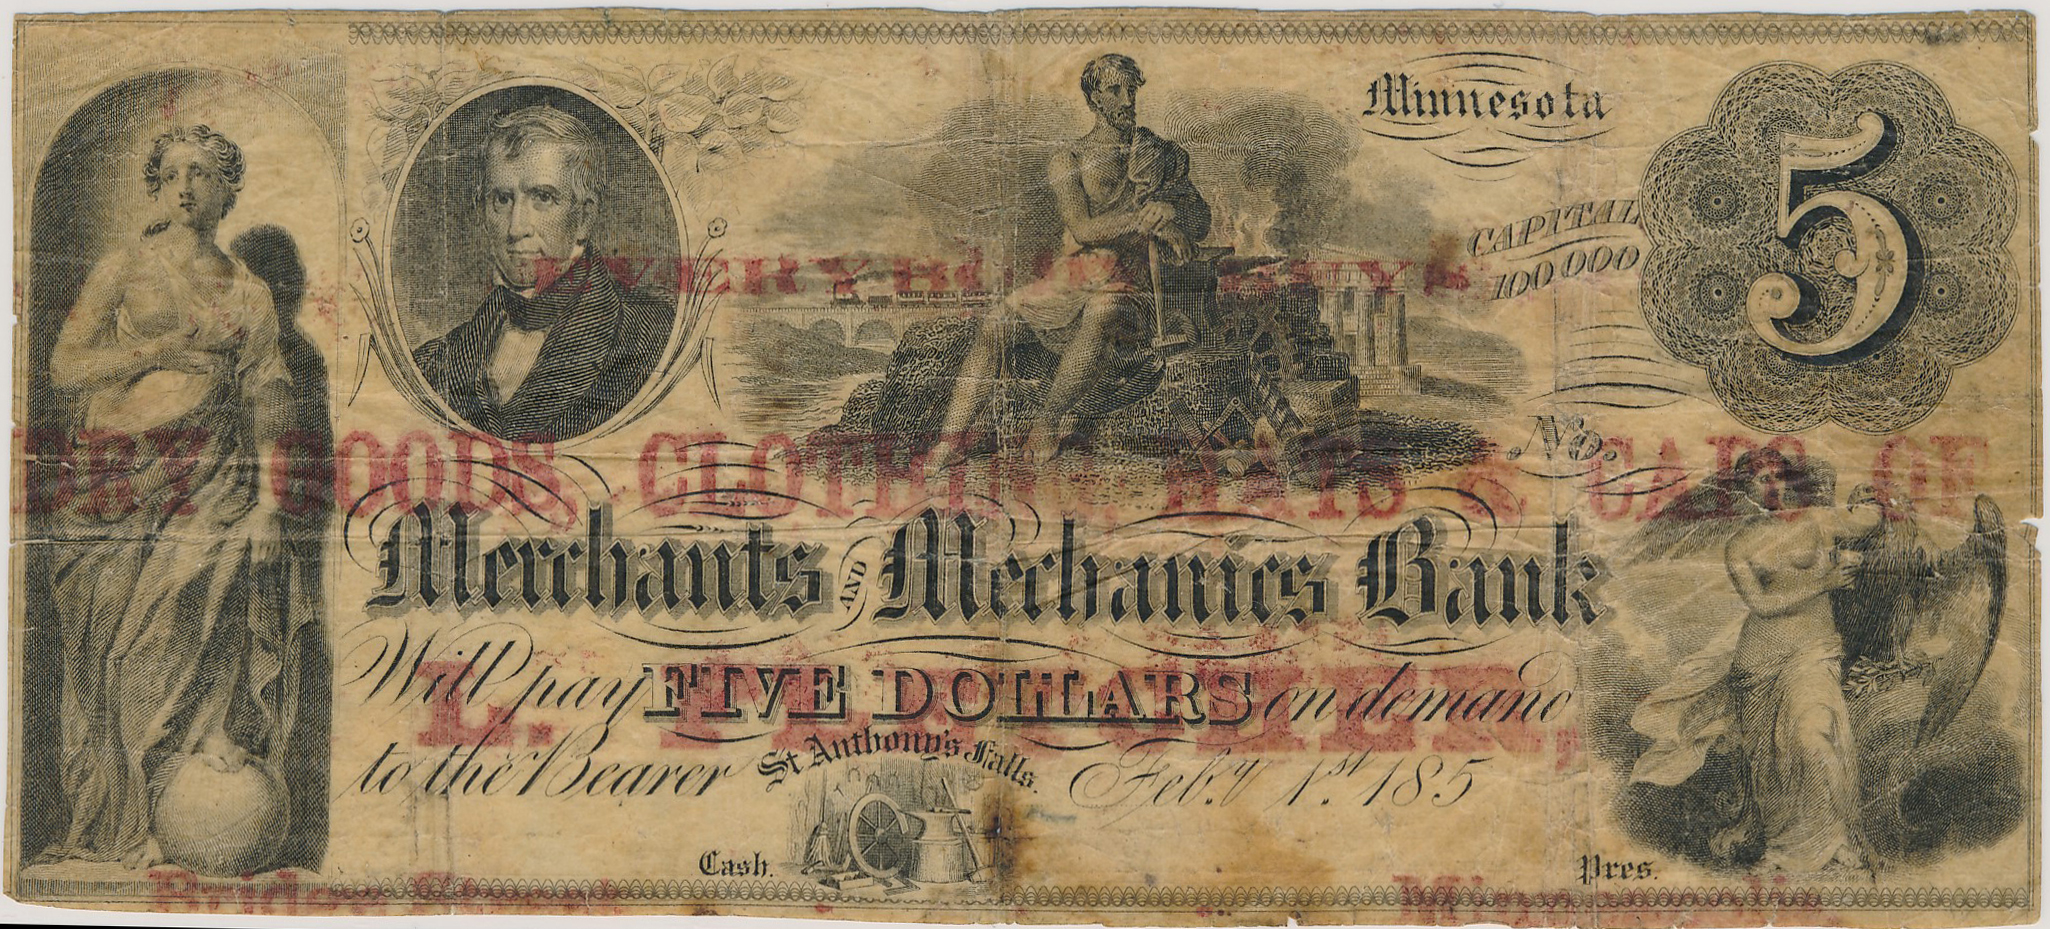 L. Fletcher overprint on $5 Merchants and Mechanics Bank